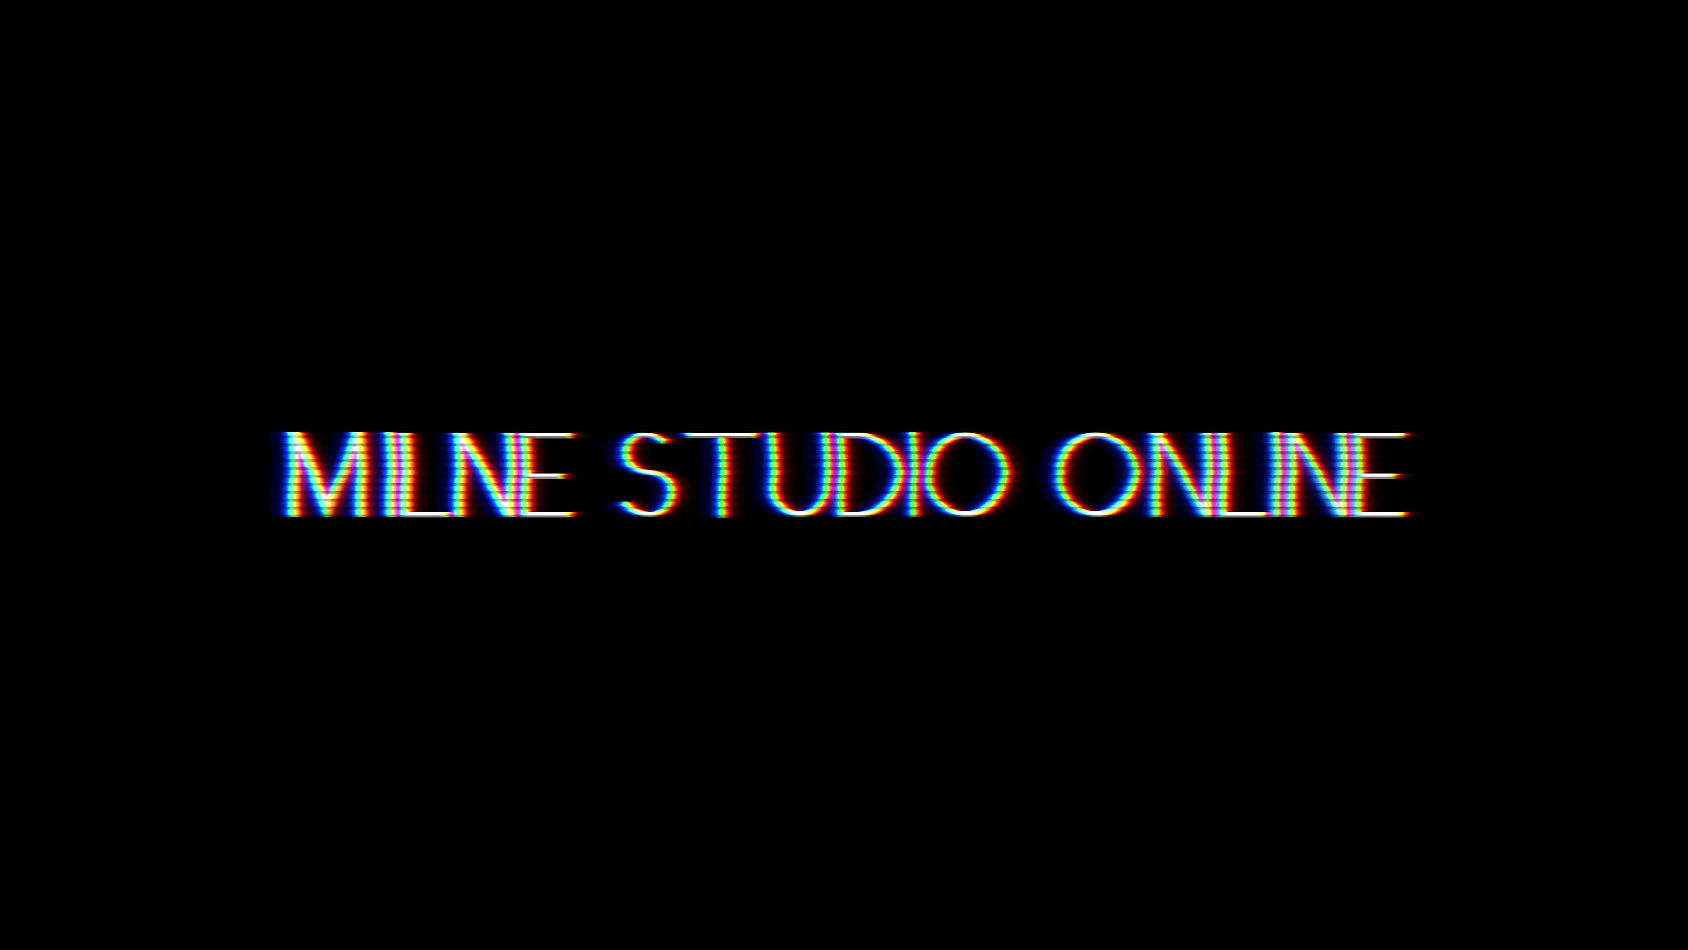 Milne Studio Online